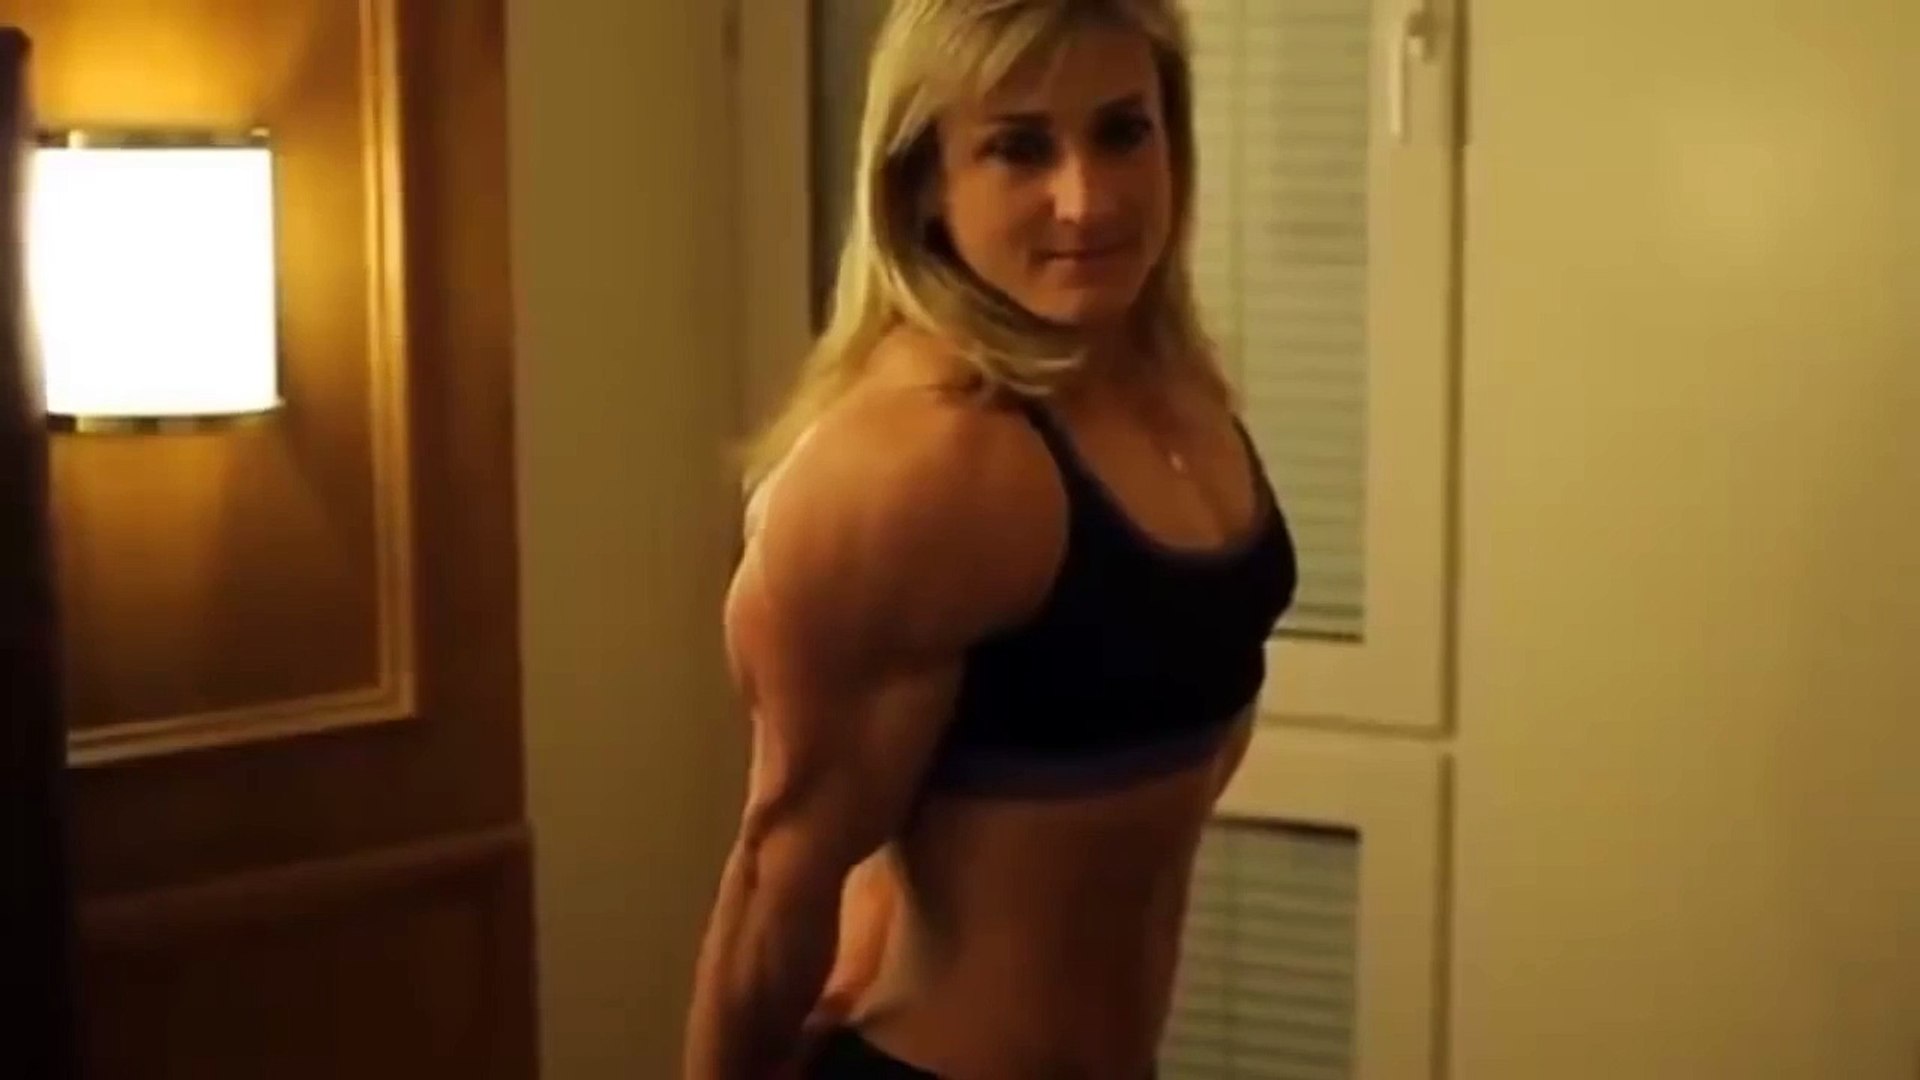 female Bodybuilding world's best biceps - video Dailymotion